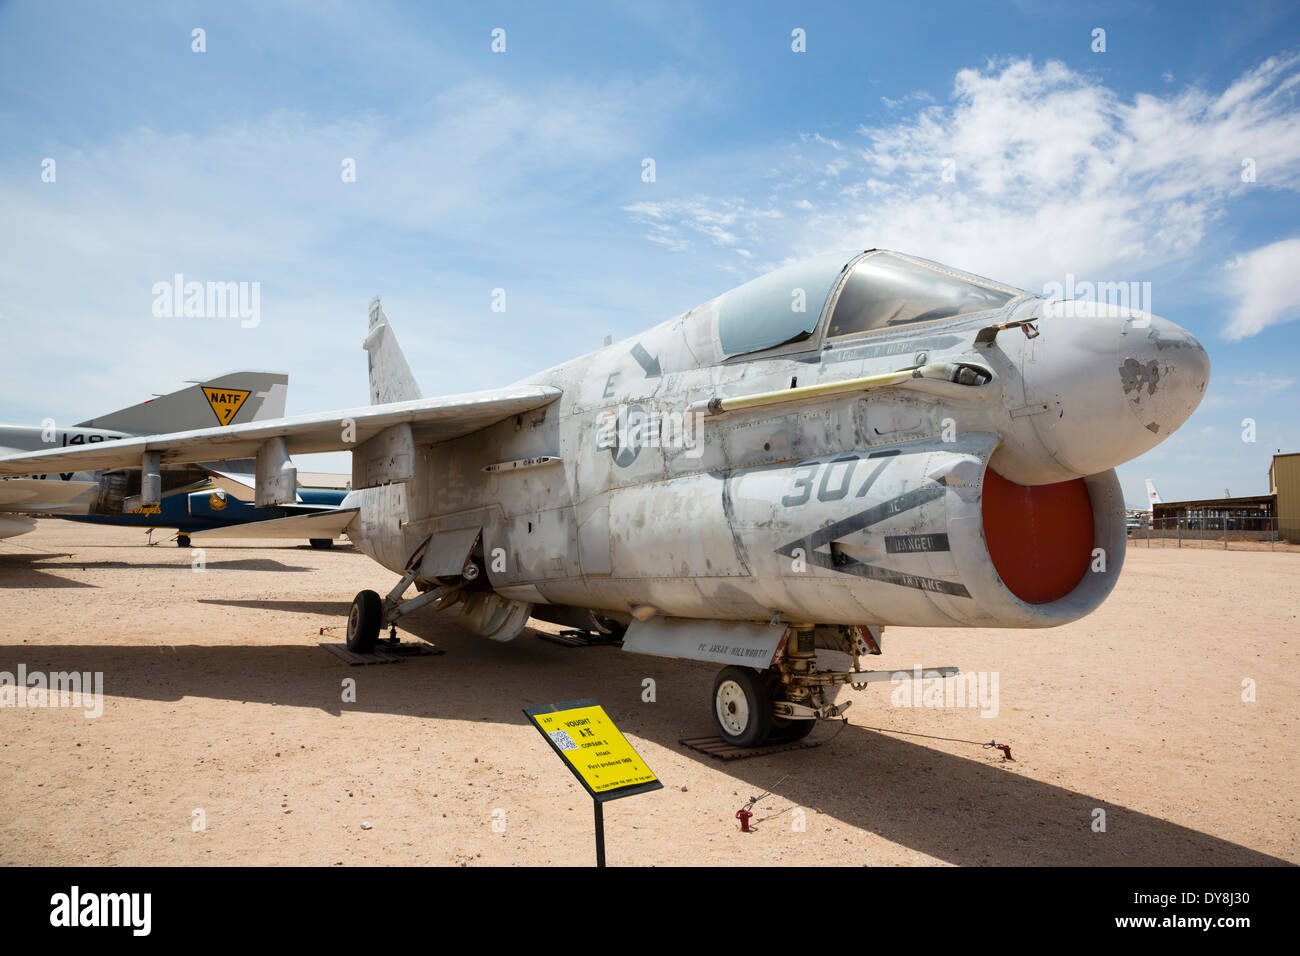 USA, Arizona, Tucson, Pima Air and Space Museum, Vought A-7E 'Corsair II', attack aircraft. Stock Photo